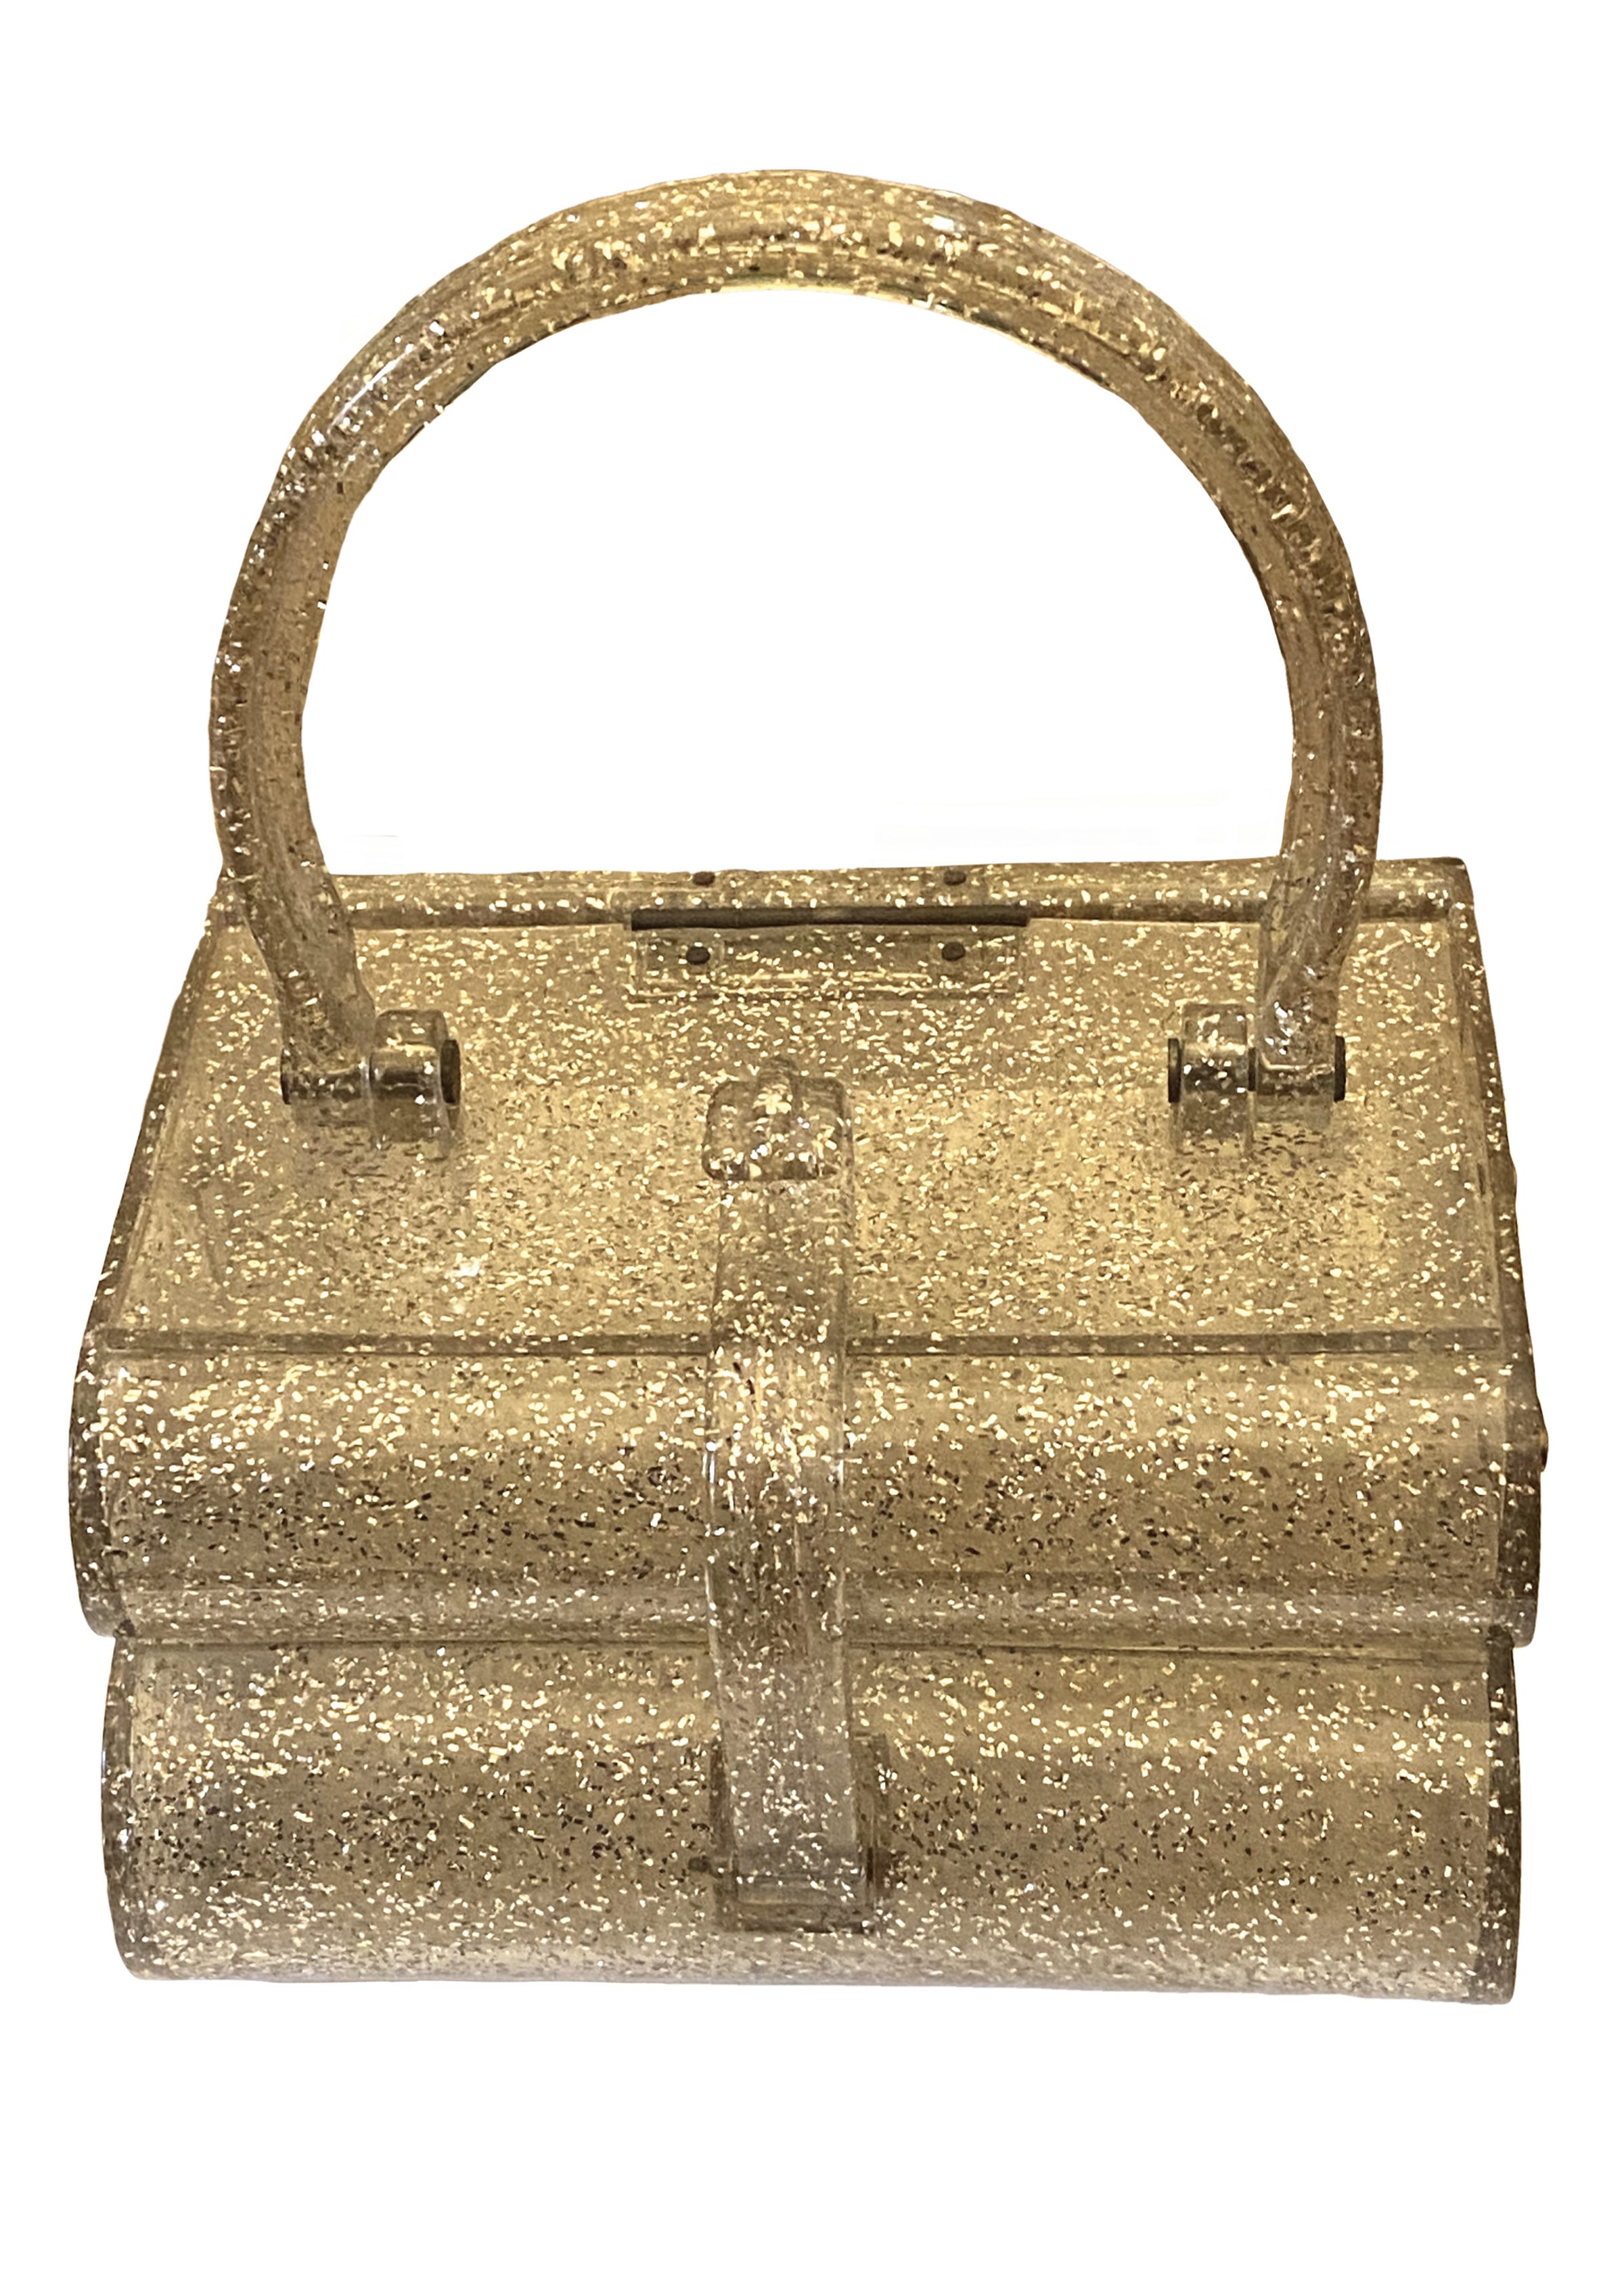 LXXUY Women Evening Clutch Bag Leather Sparkling Designer Handbag Purse for  Wedding Party, Rose Gold, One Size : Amazon.in: Fashion